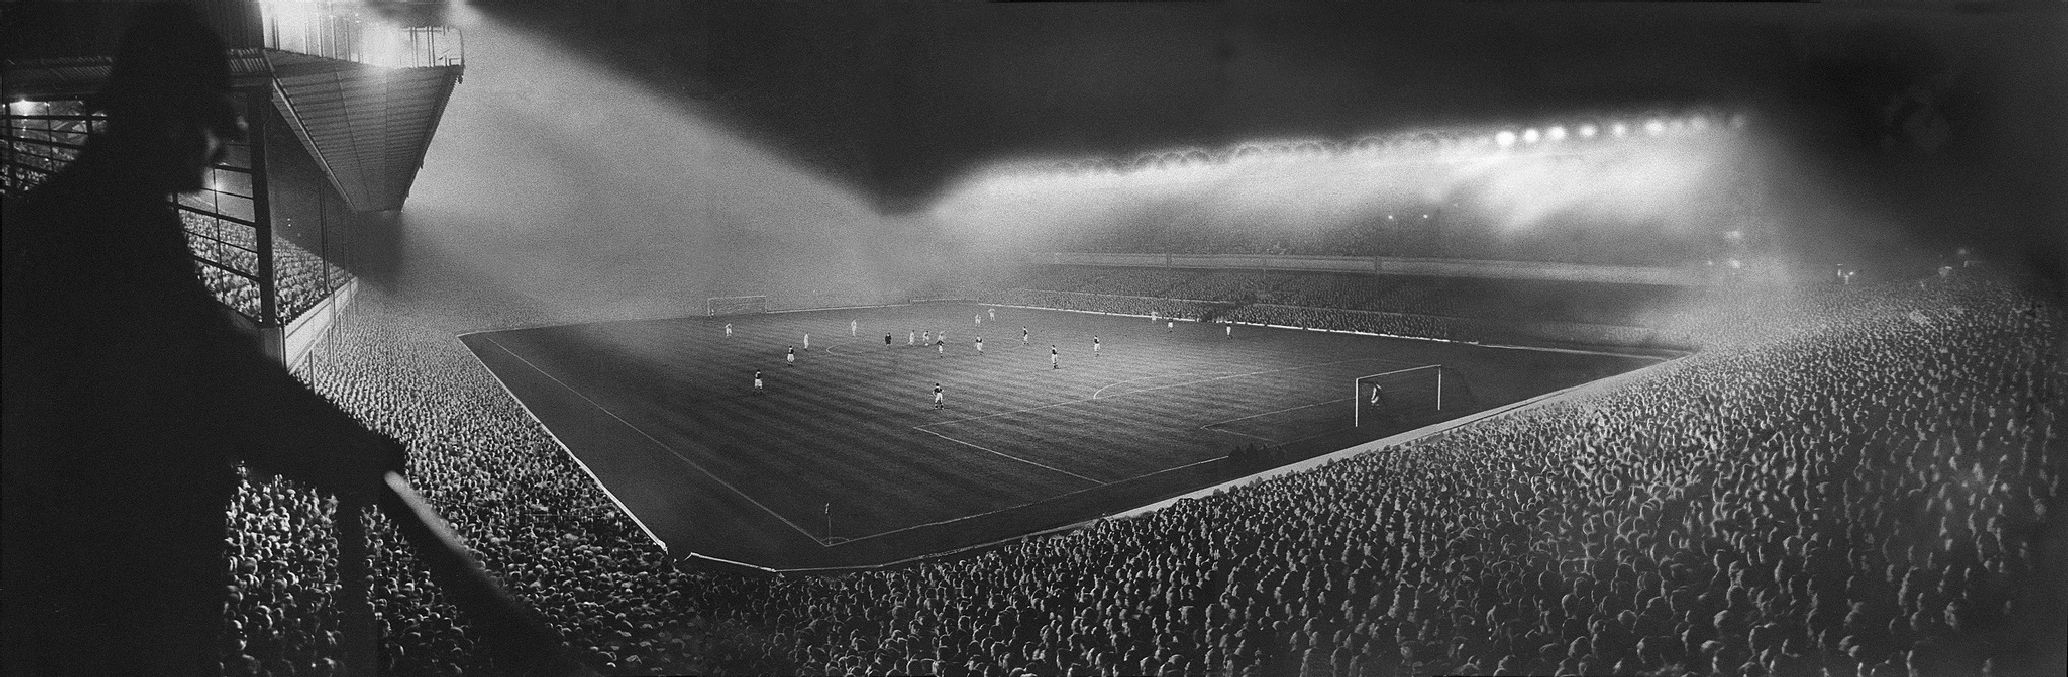 historical-photos-pt9-arsenal-stadium-london-england-1951.jpg